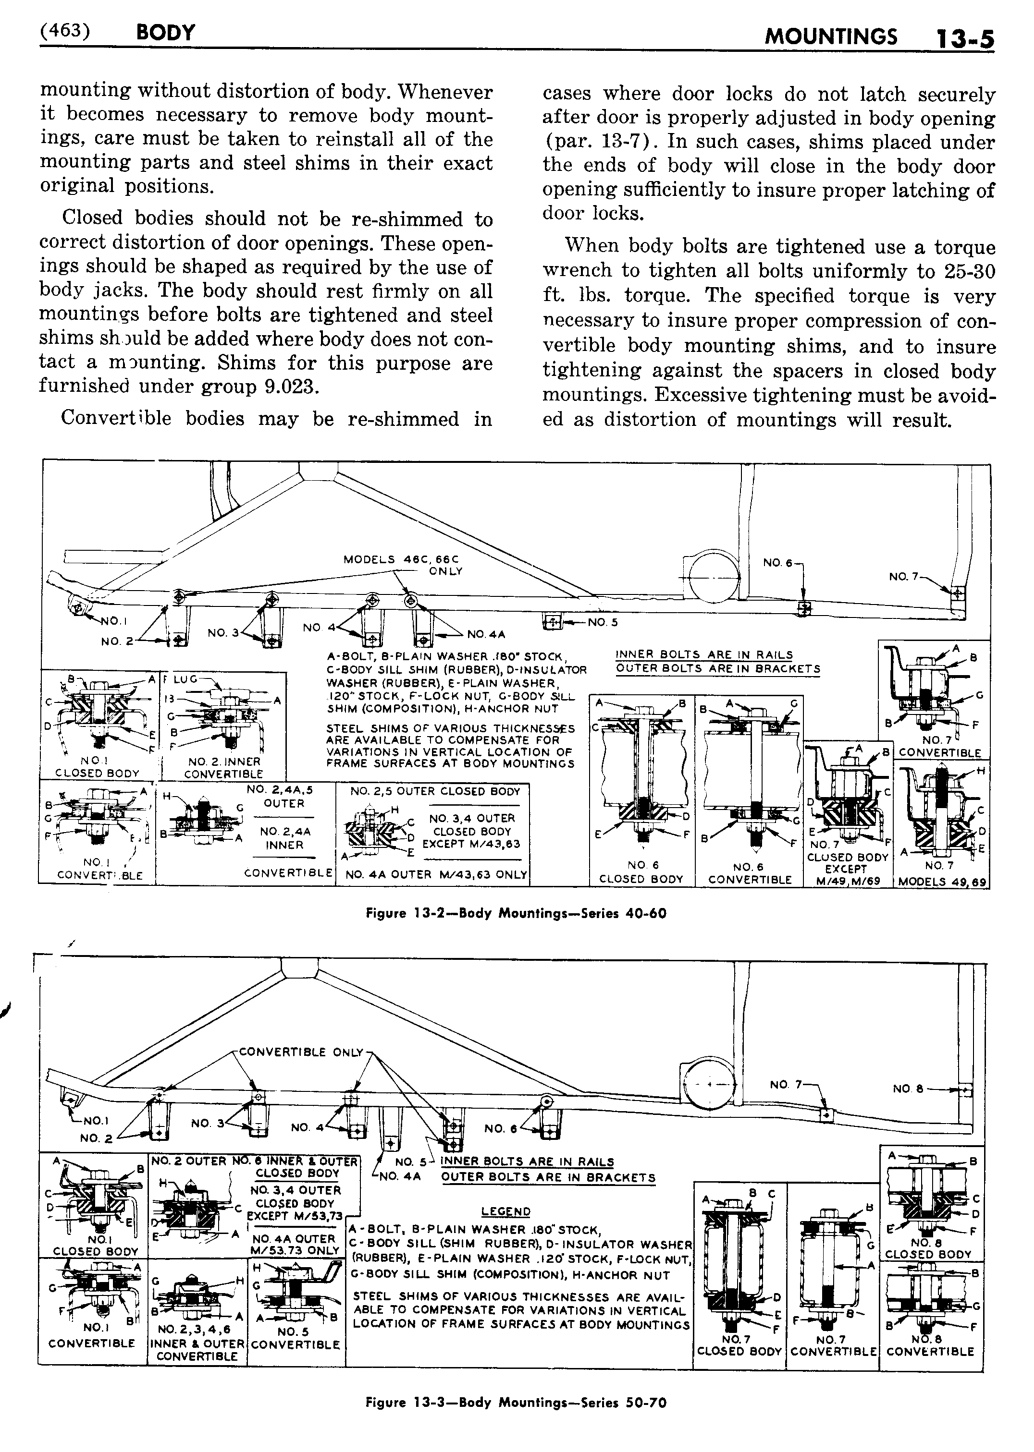 n_14 1956 Buick Shop Manual - Body-005-005.jpg